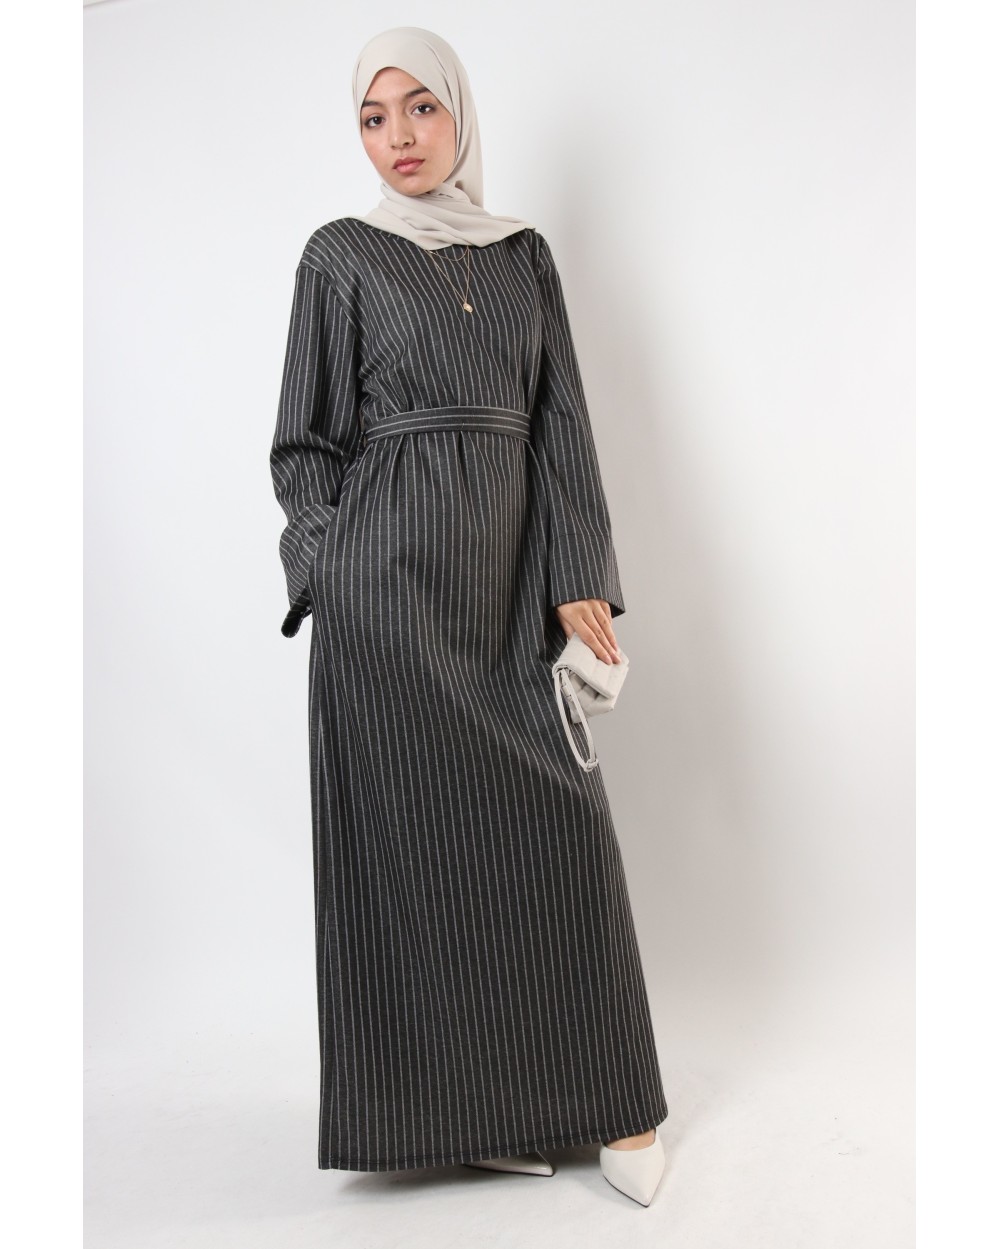 Striped Rihabe dress